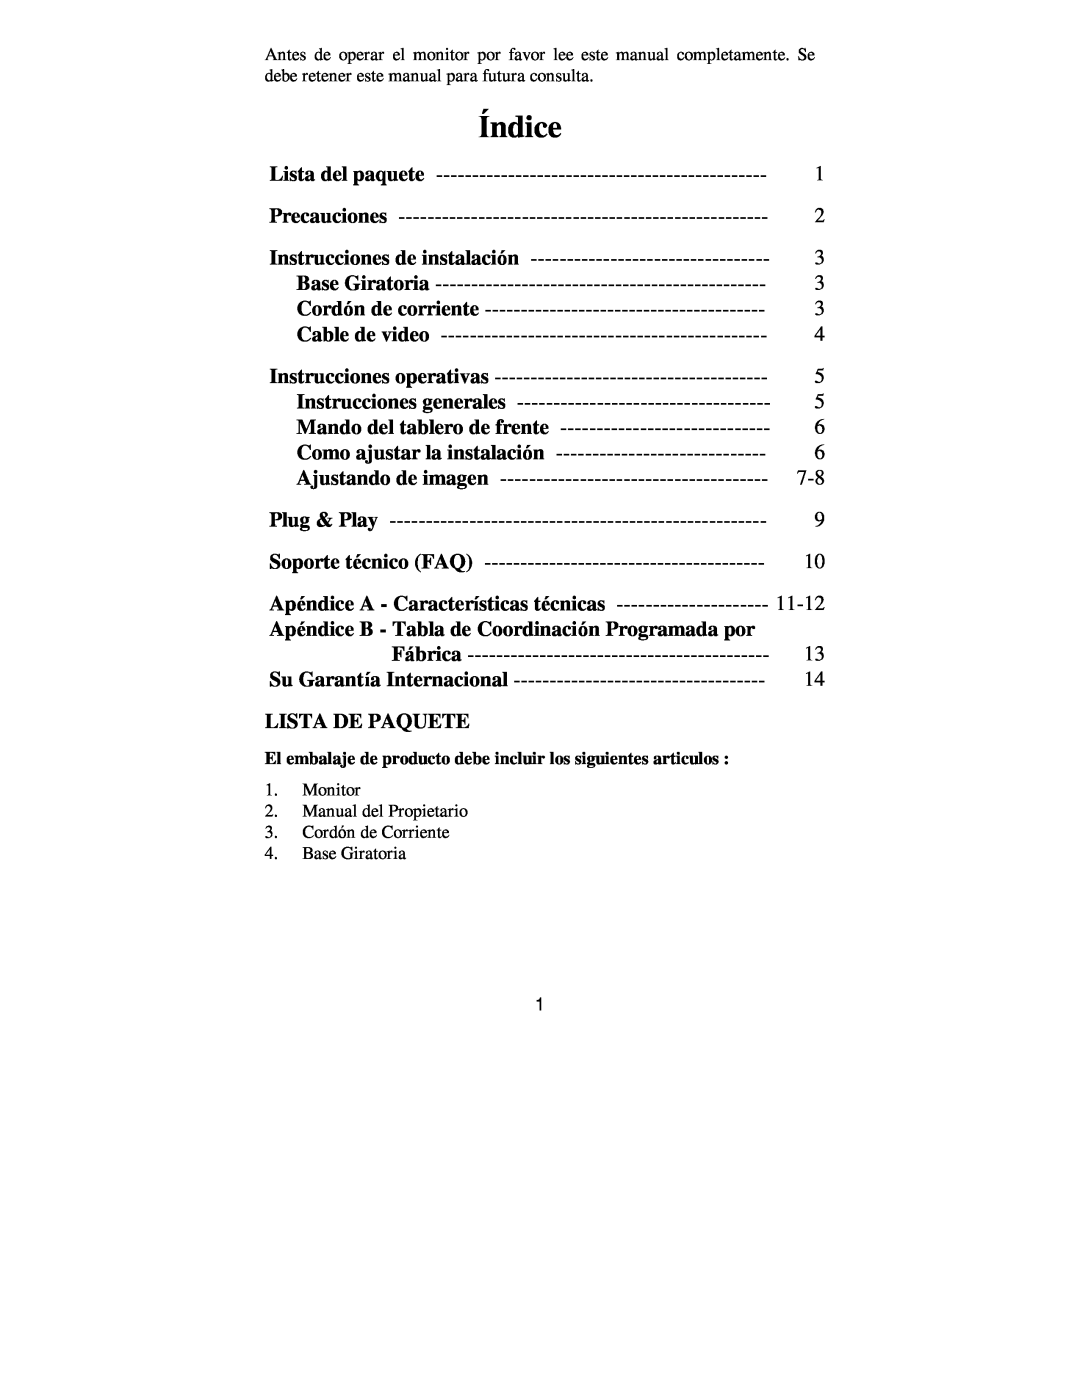 Philips 107E69 manual Índice, Como ajustar la instalación, Apéndice A - Características técnicas, Lista De Paquete, 11-12 